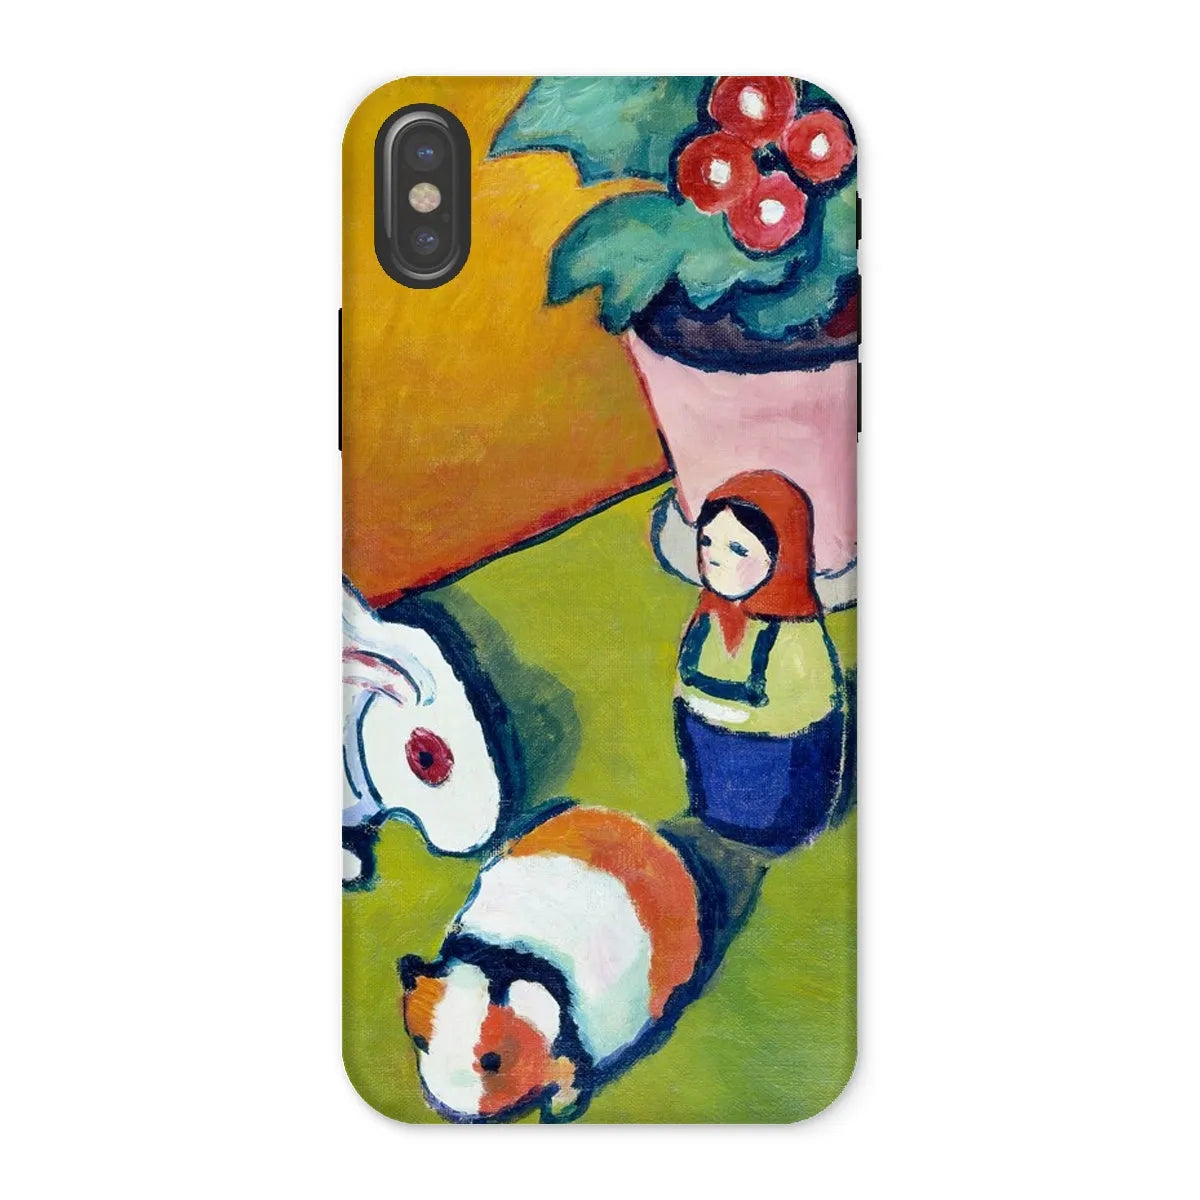 Little Walter’s Toys Art Phone Case - August Macke - Iphone x / Matte - Mobile Phone Cases - Aesthetic Art